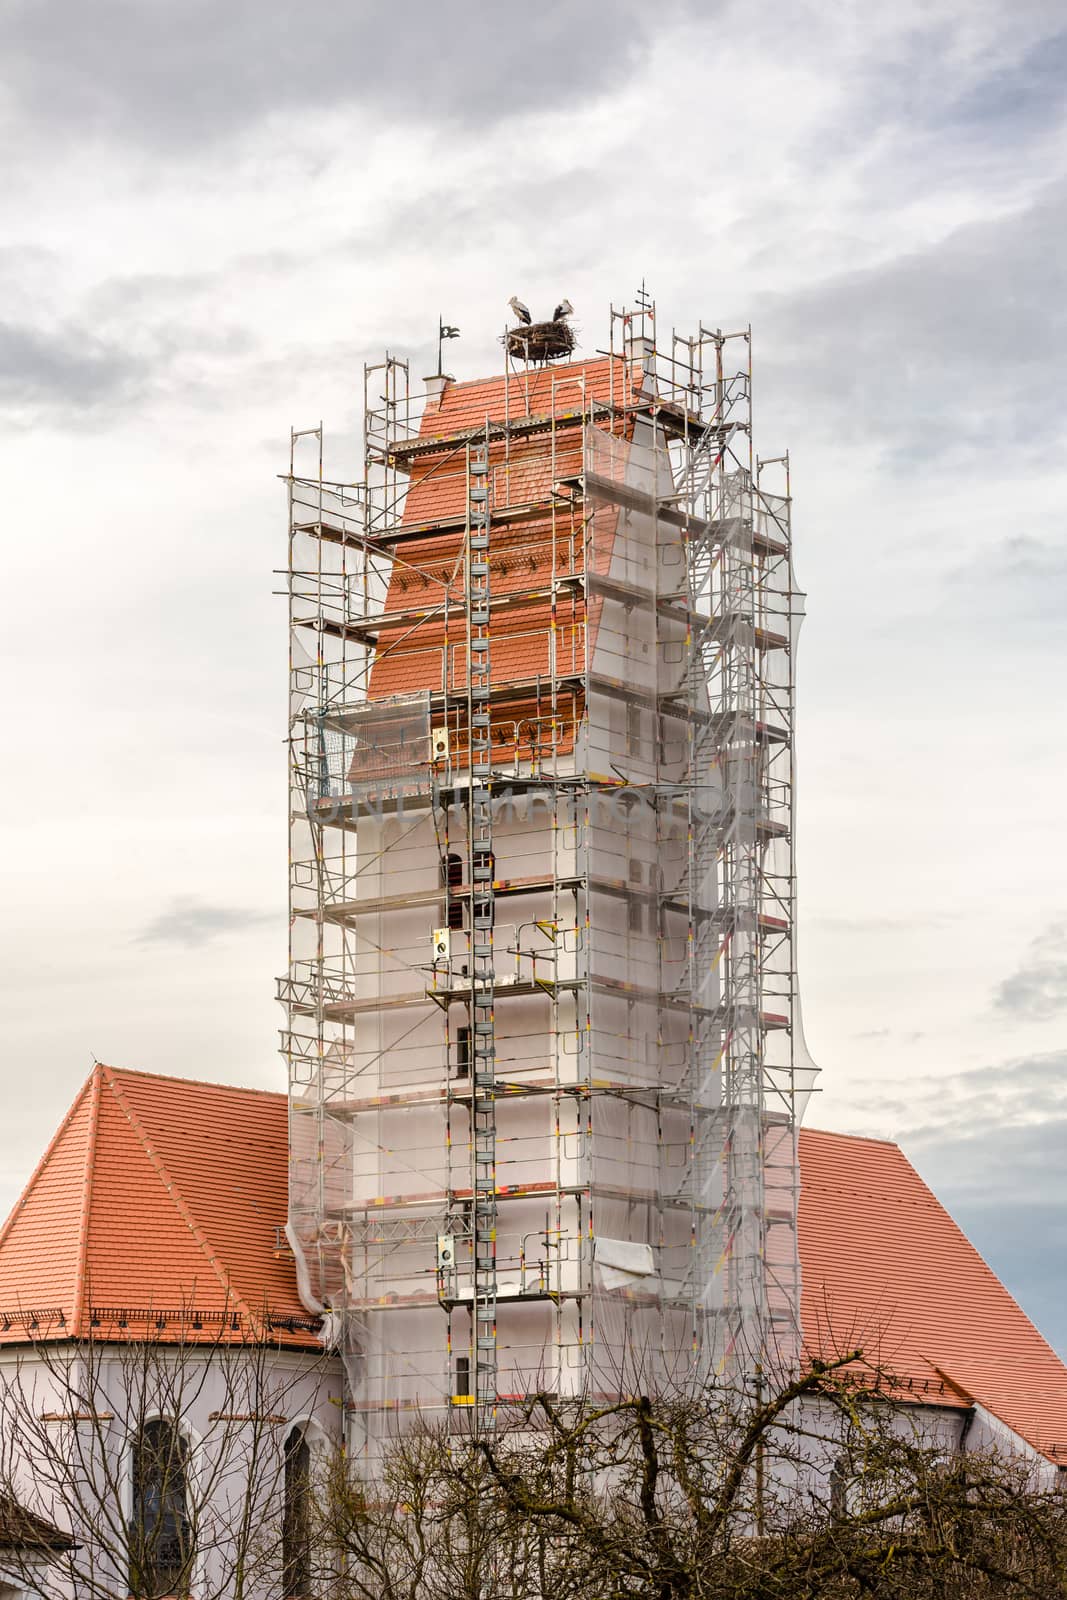 stork´s nest above a scaffolded church spire by maxlindna